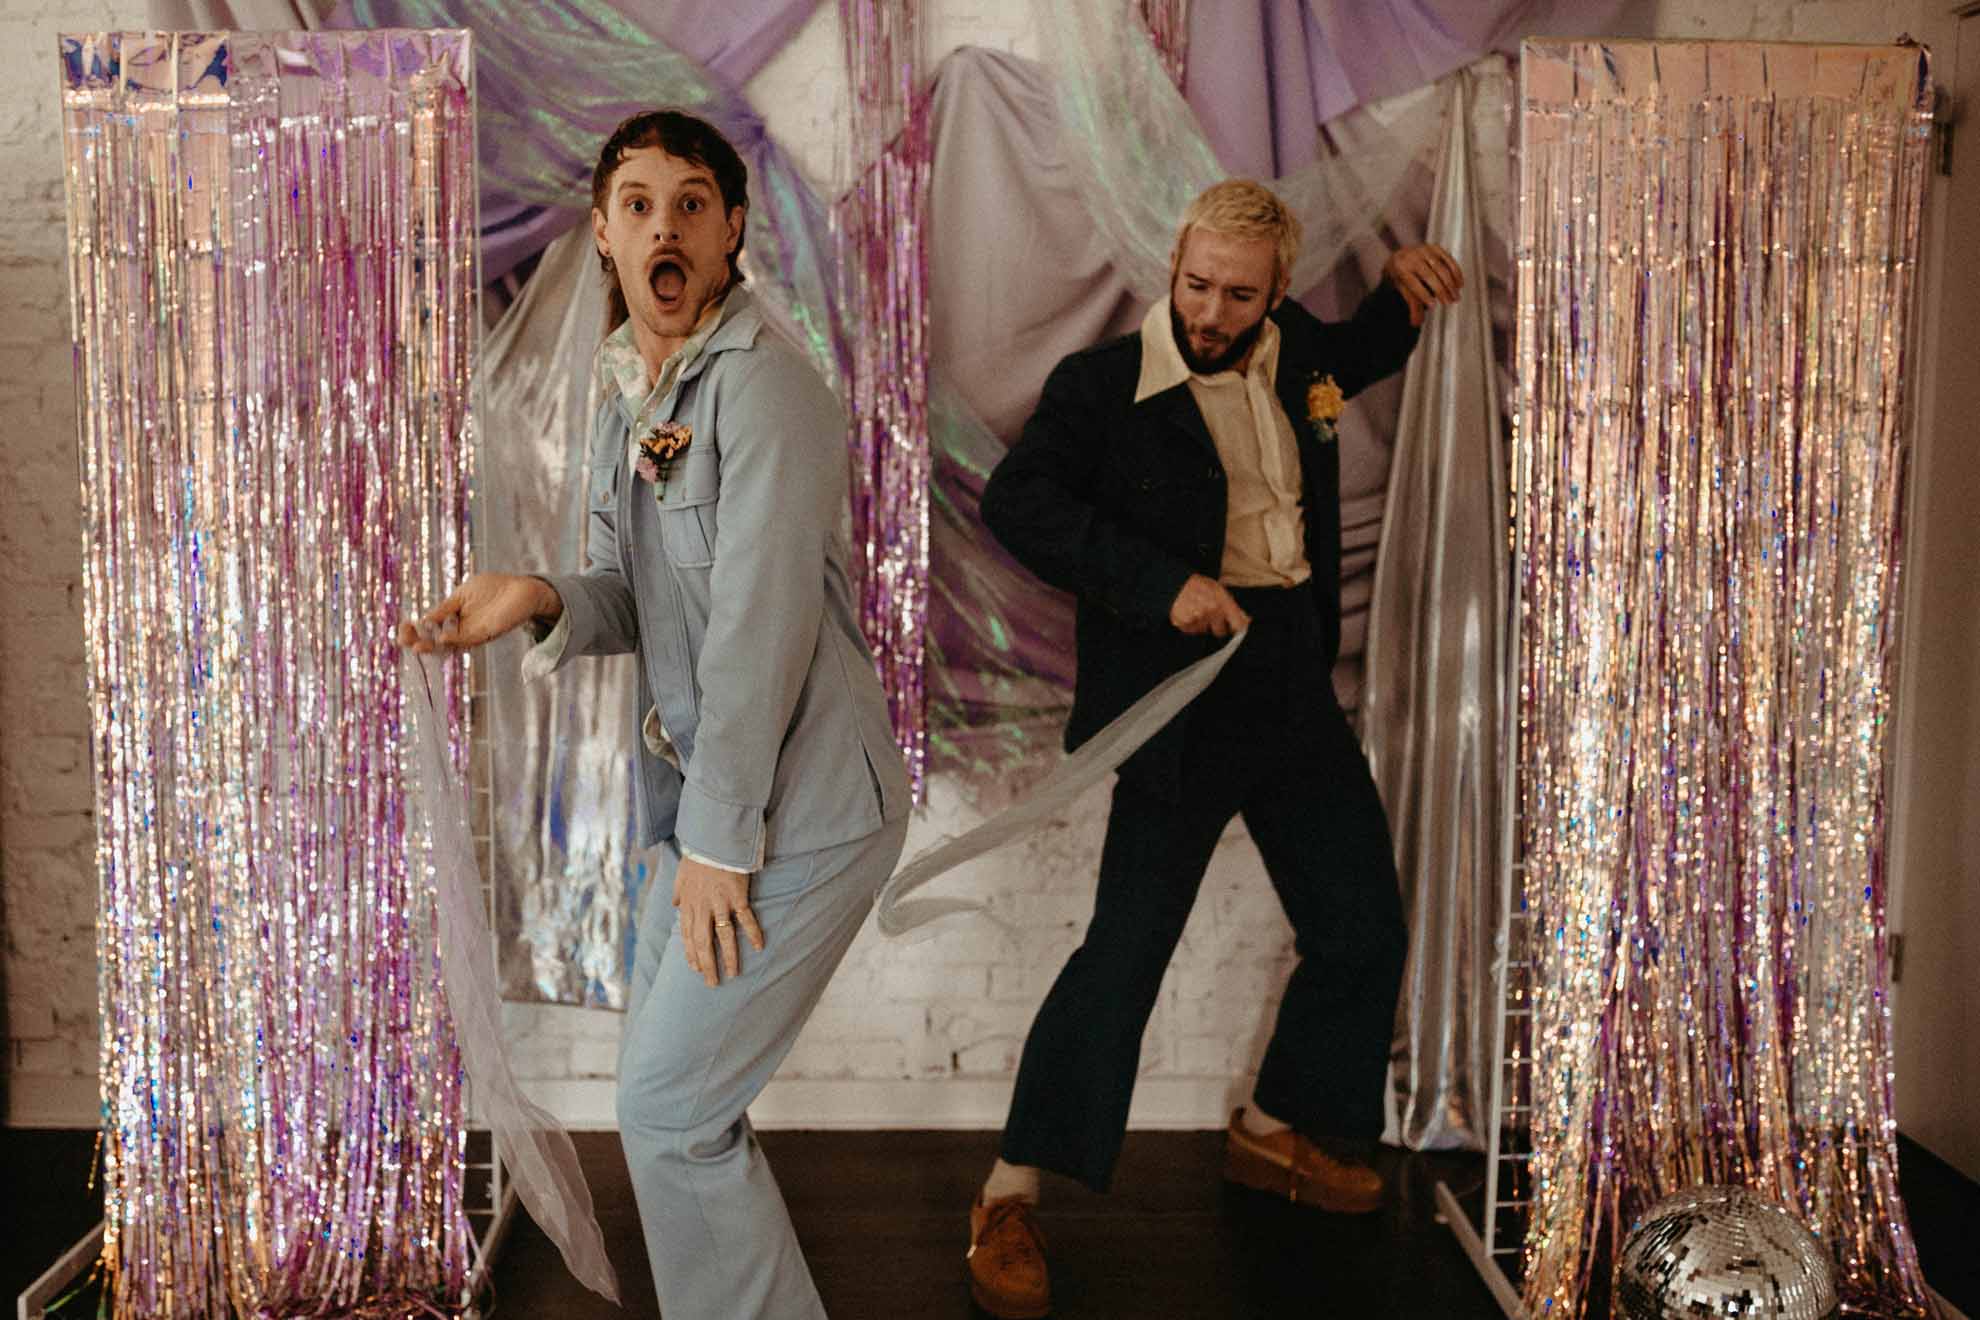 urban-loft-retro-lgbtq-elopement Savannah Williams photography gay two grooms queer mr & mr wedding Dancing With Them magazine